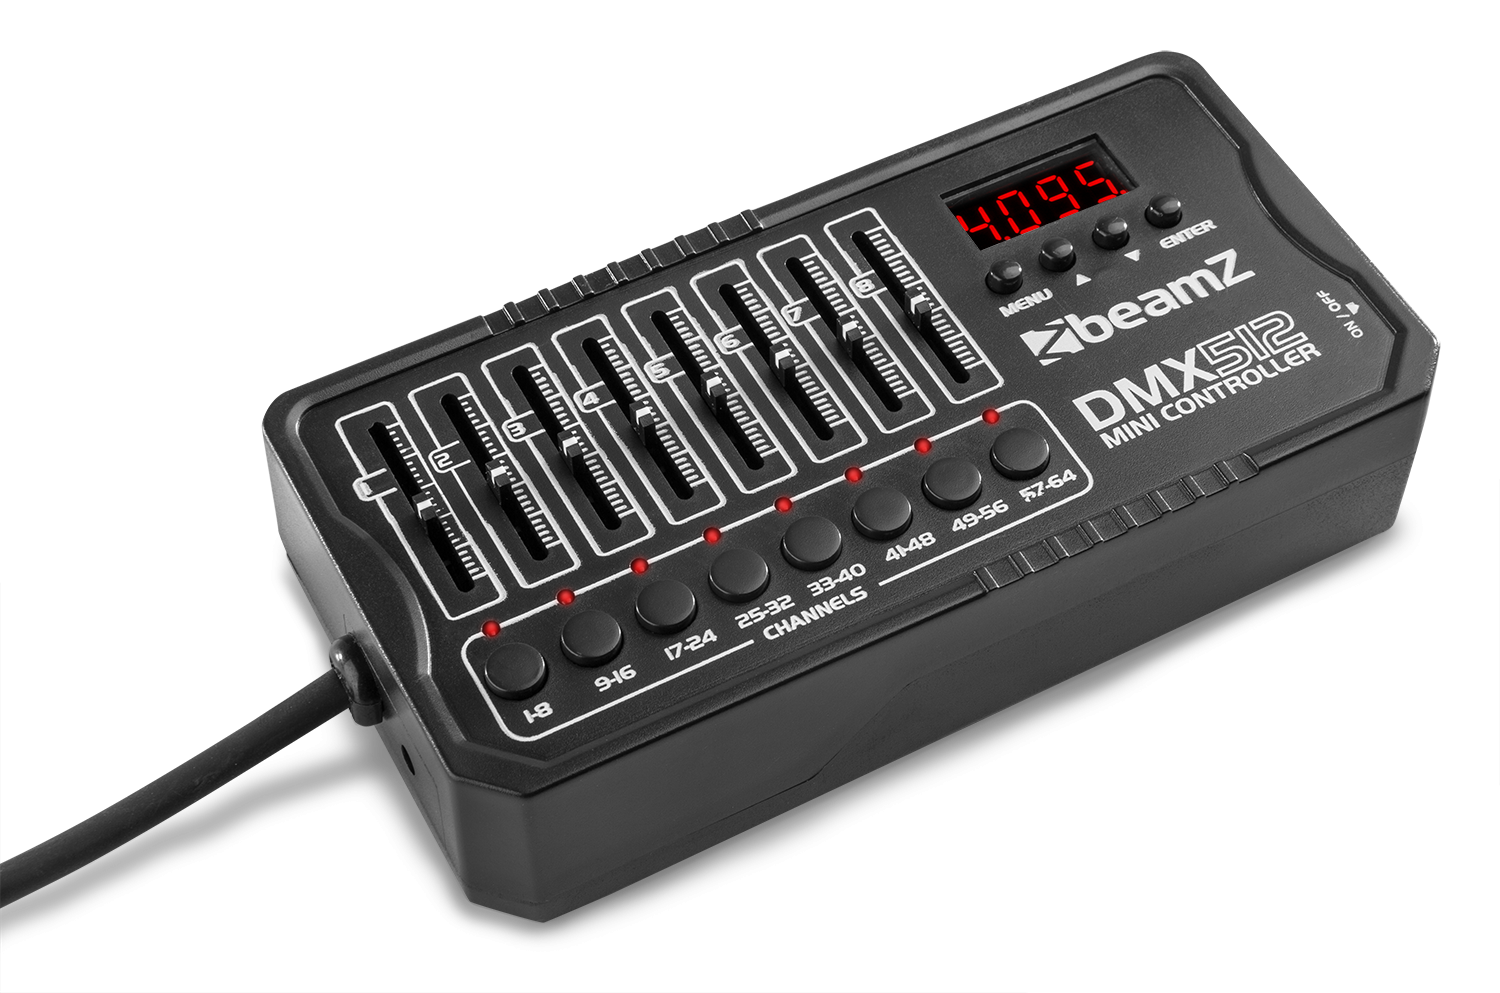 DMX-512 Mini Controller - beamZ